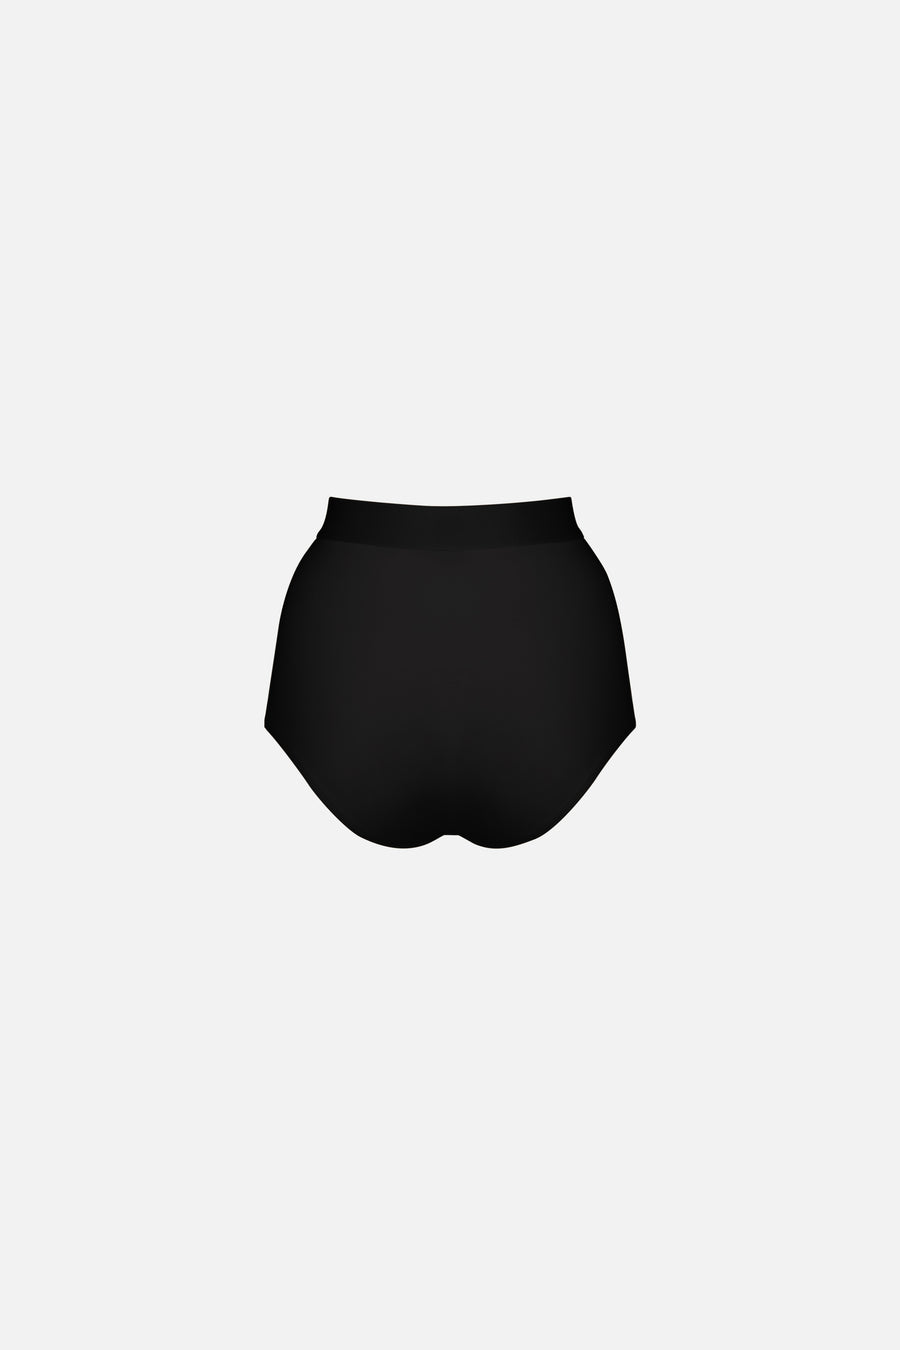 U5 Shorts